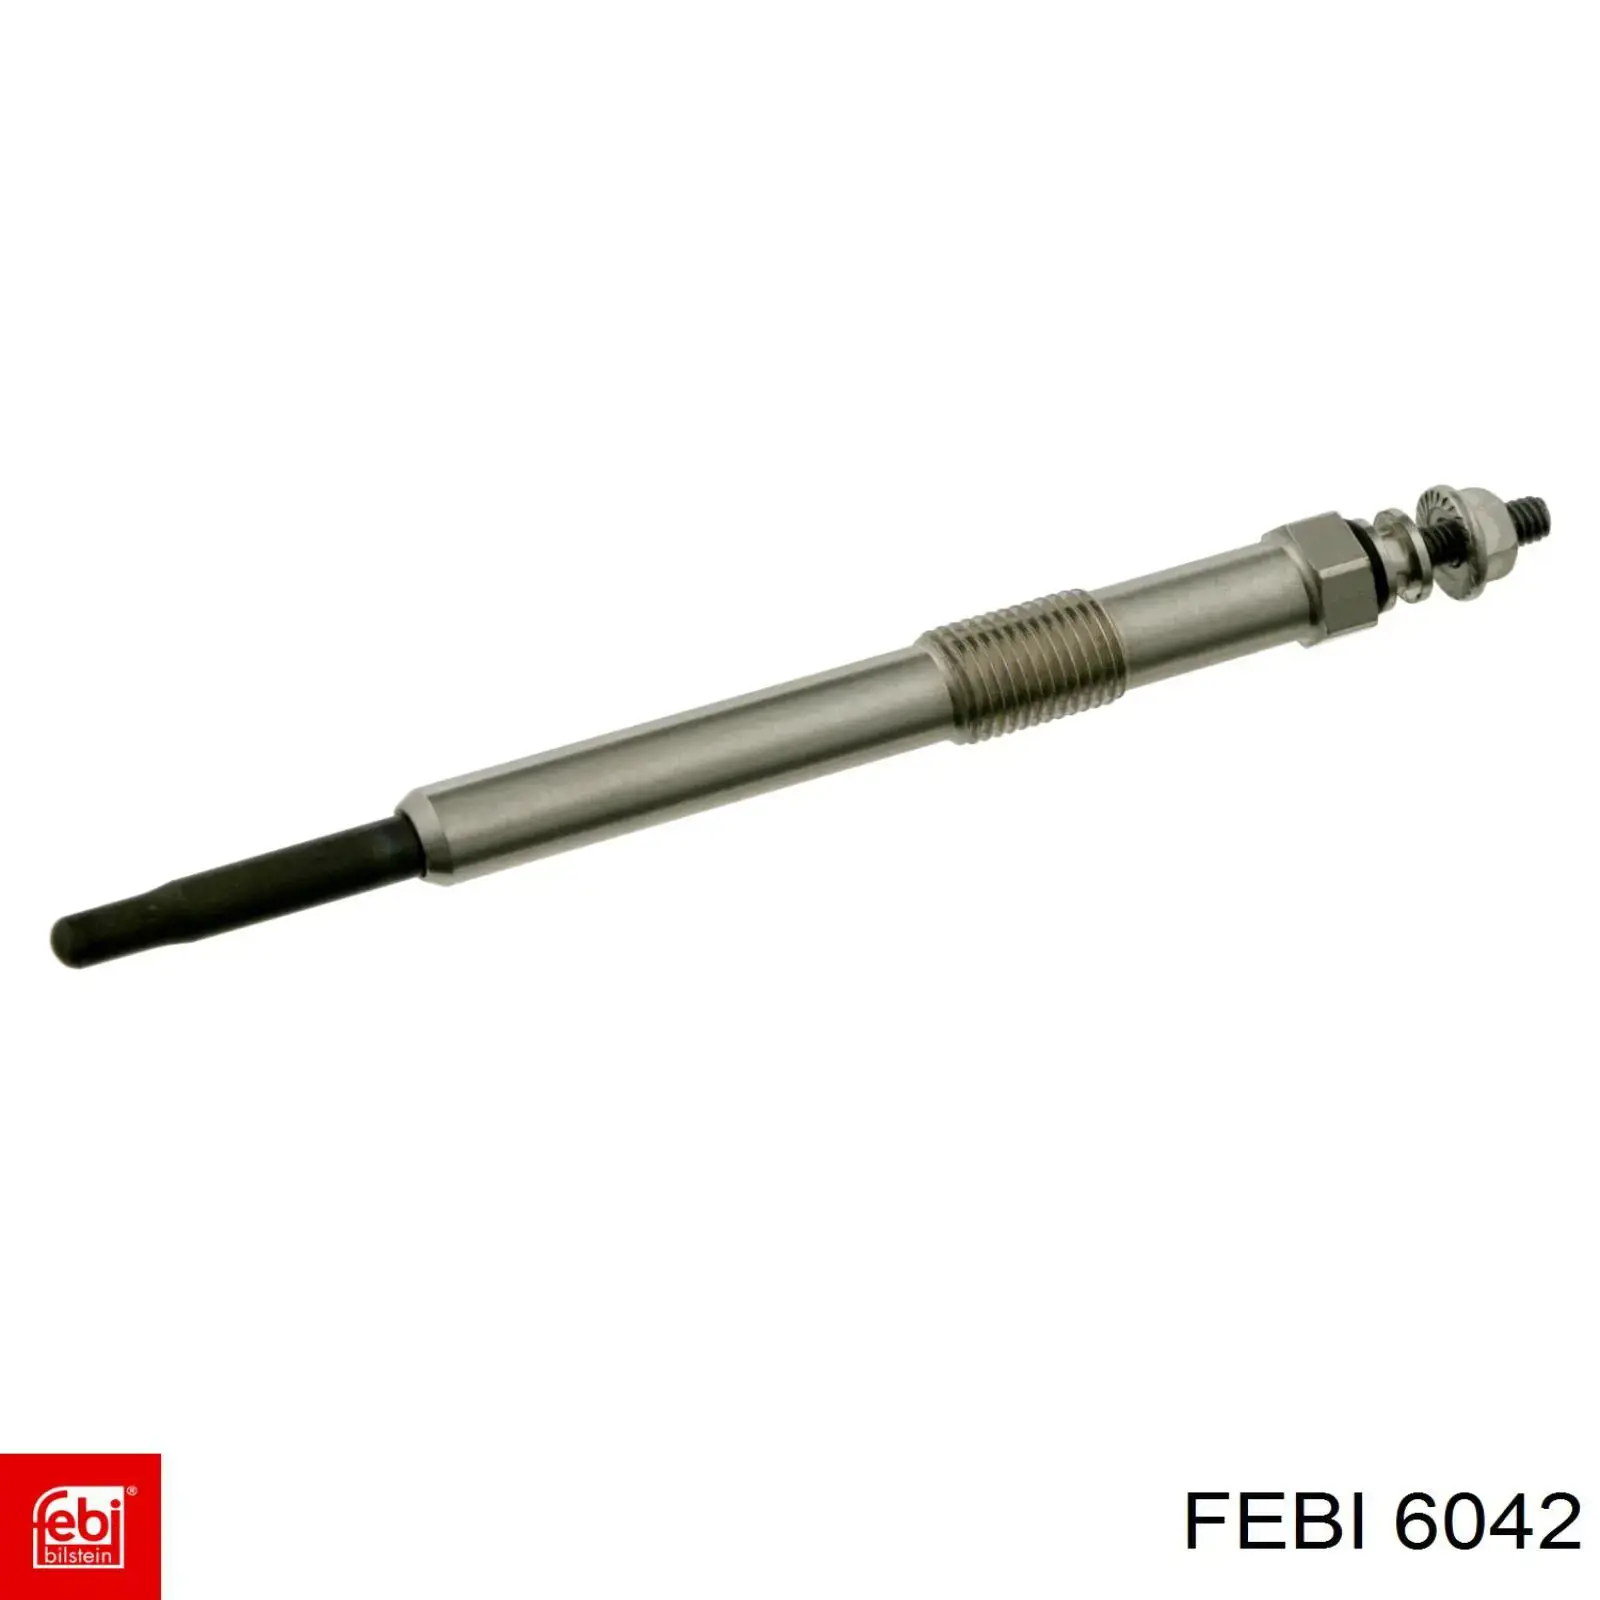 6042 Febi sensor, temperatura del refrigerante (encendido el ventilador del radiador)